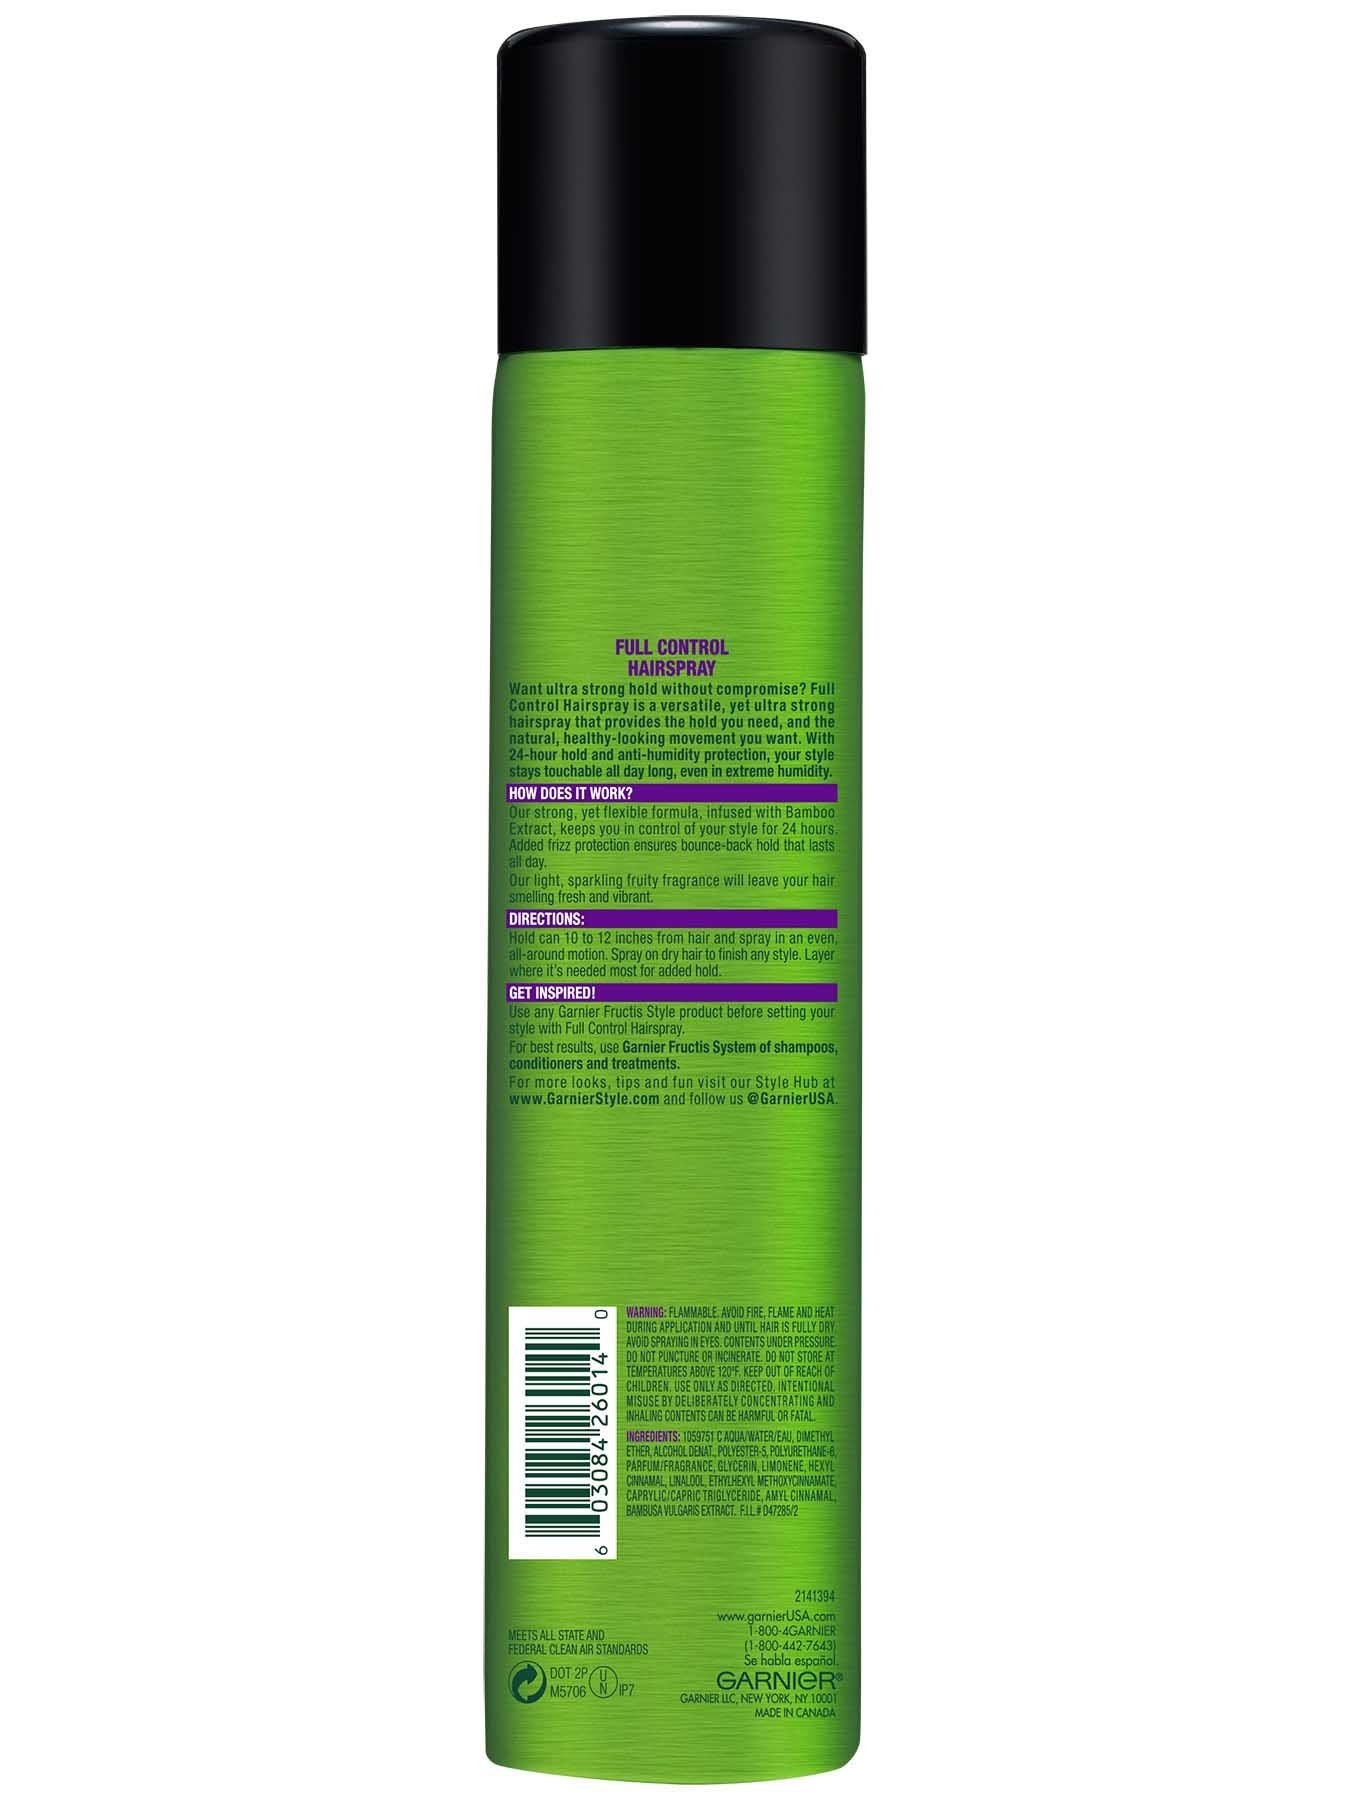 Back view of Full Control Anti-Humidity Aerosol Hairspray.